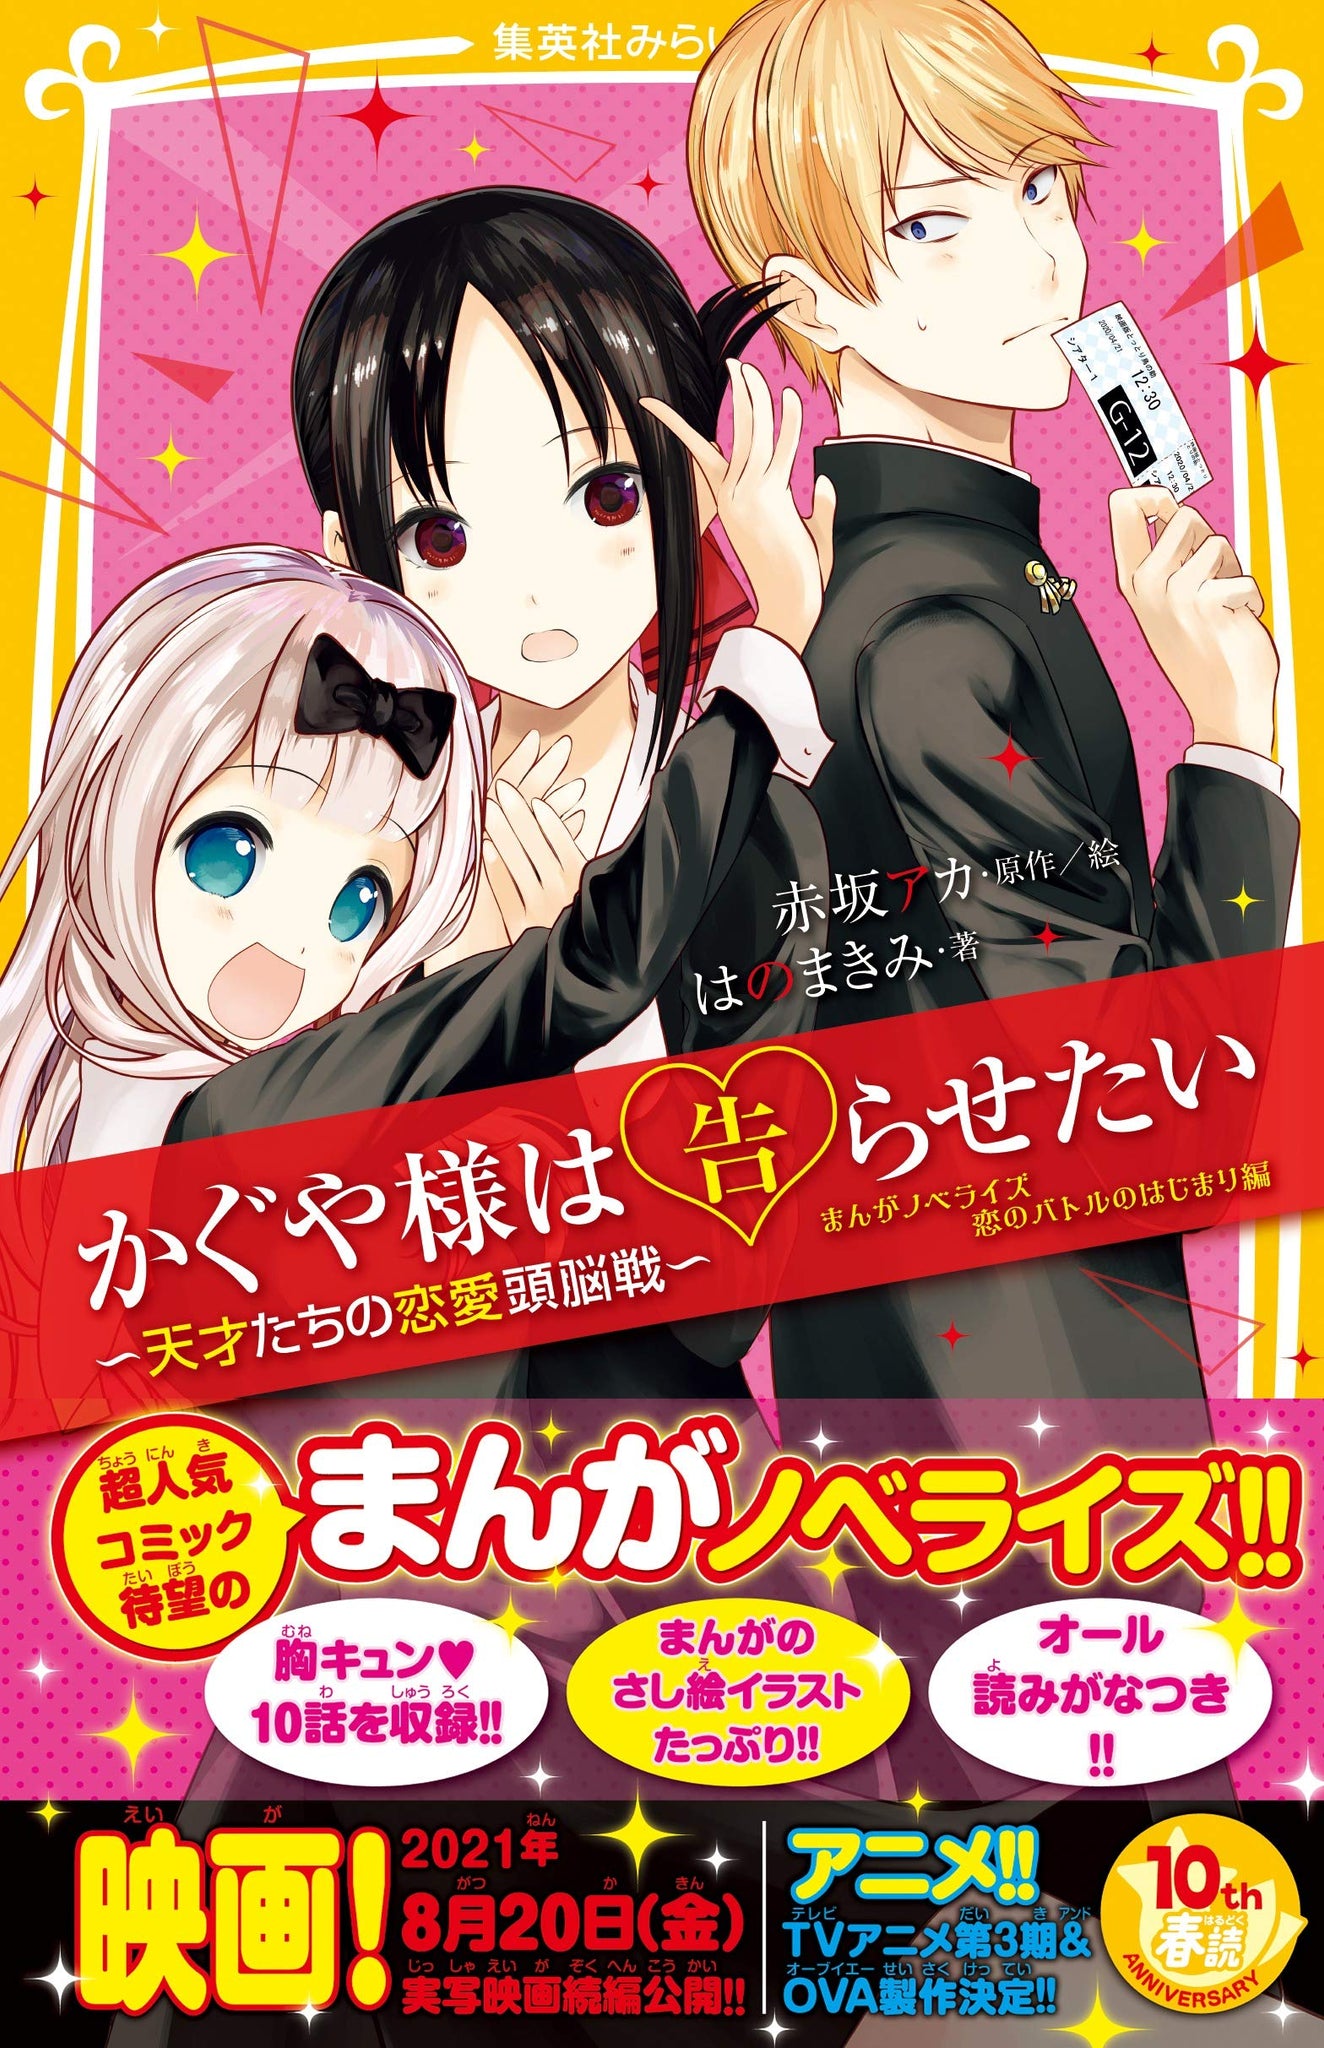 Kaguya-sama: Love Is War (Kaguya-sama wa Kokurasetai): Ultra Romantic  2(Complete Production Limited Edition) [DVD] – Japanese Book Store